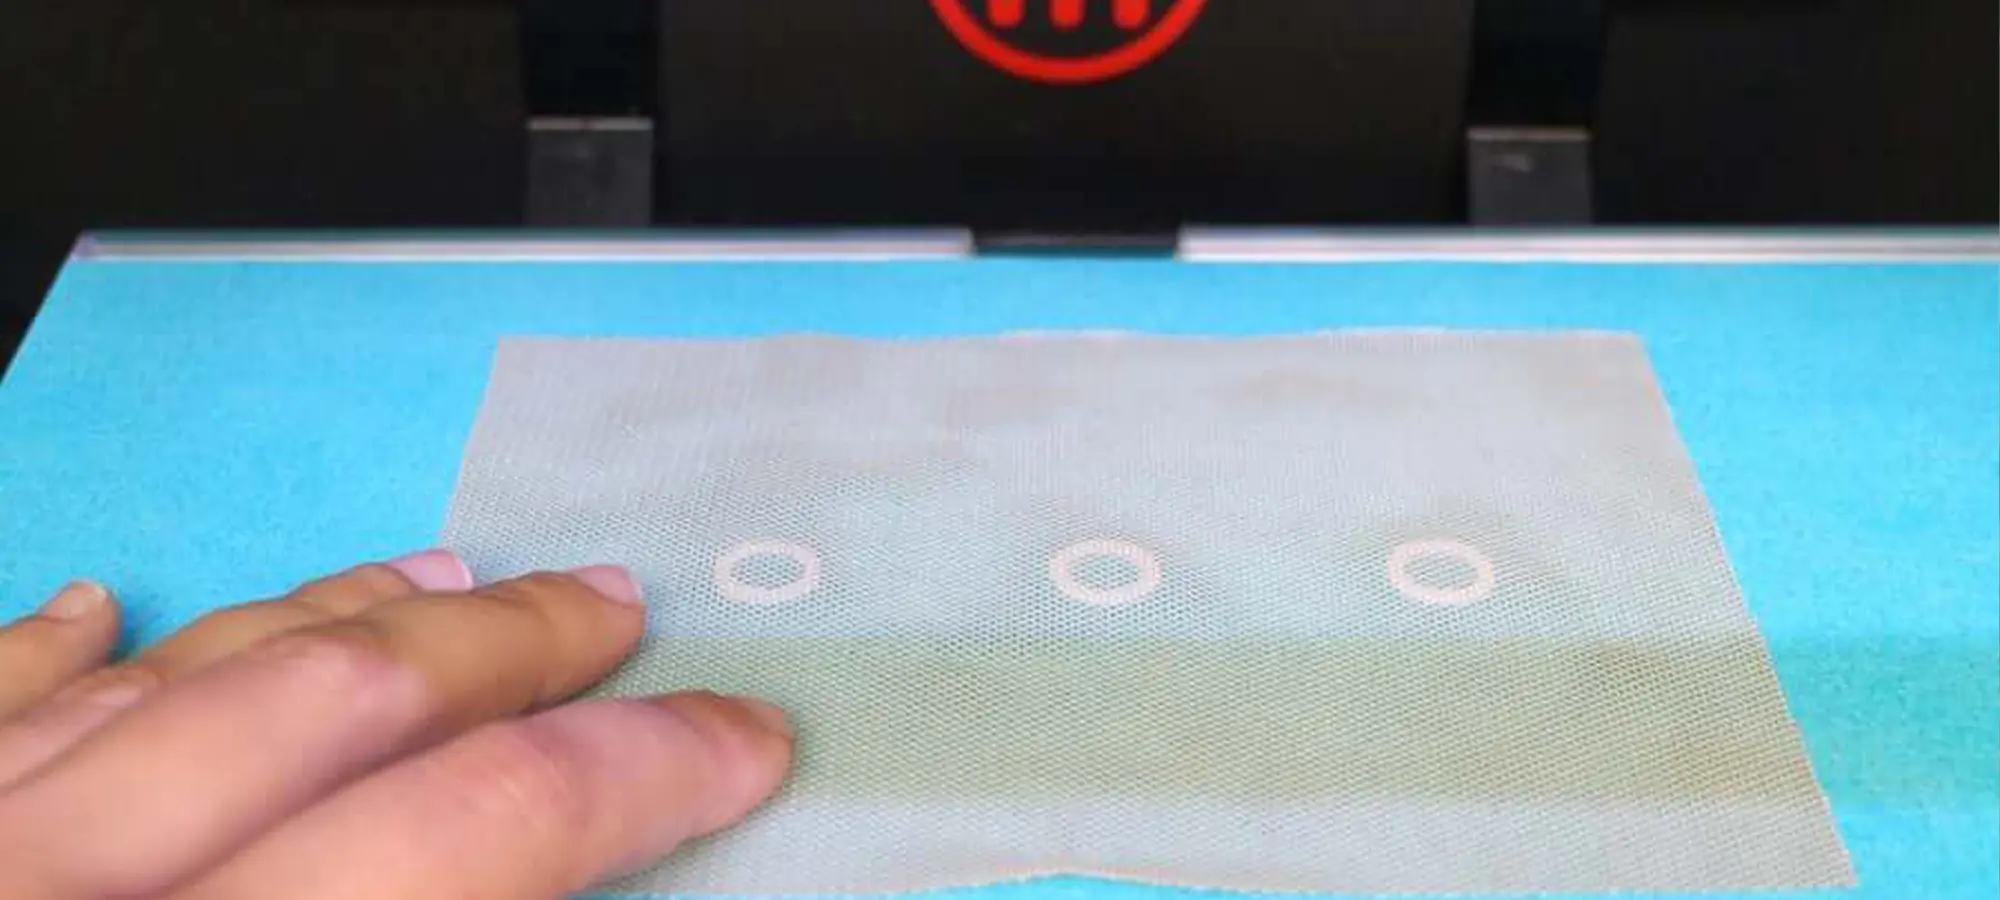 3D printing fabric